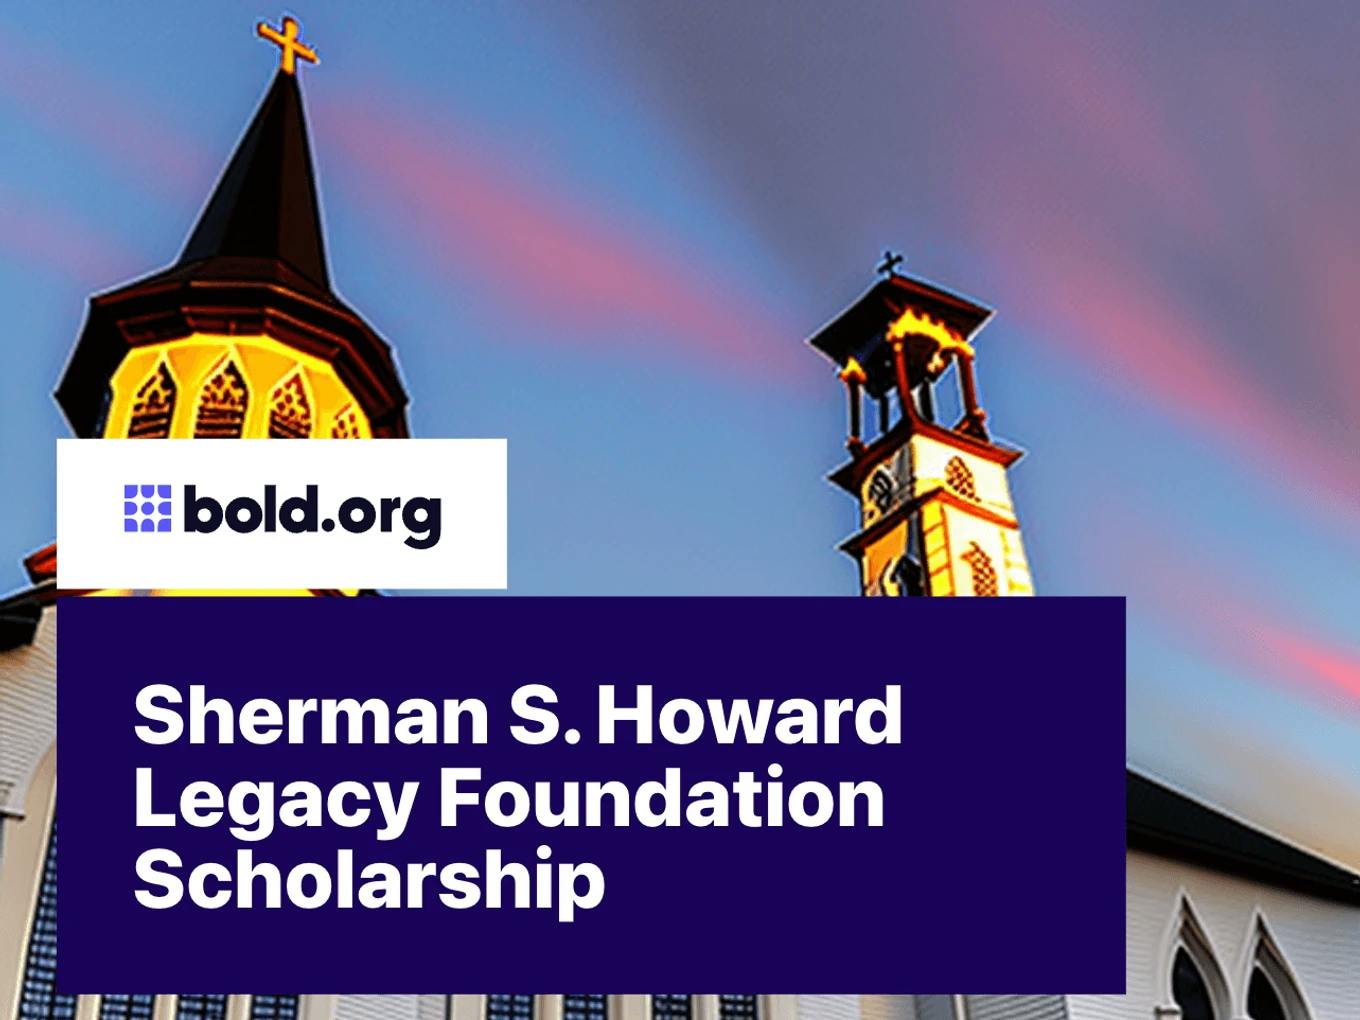 Sherman S. Howard Legacy Foundation Scholarship